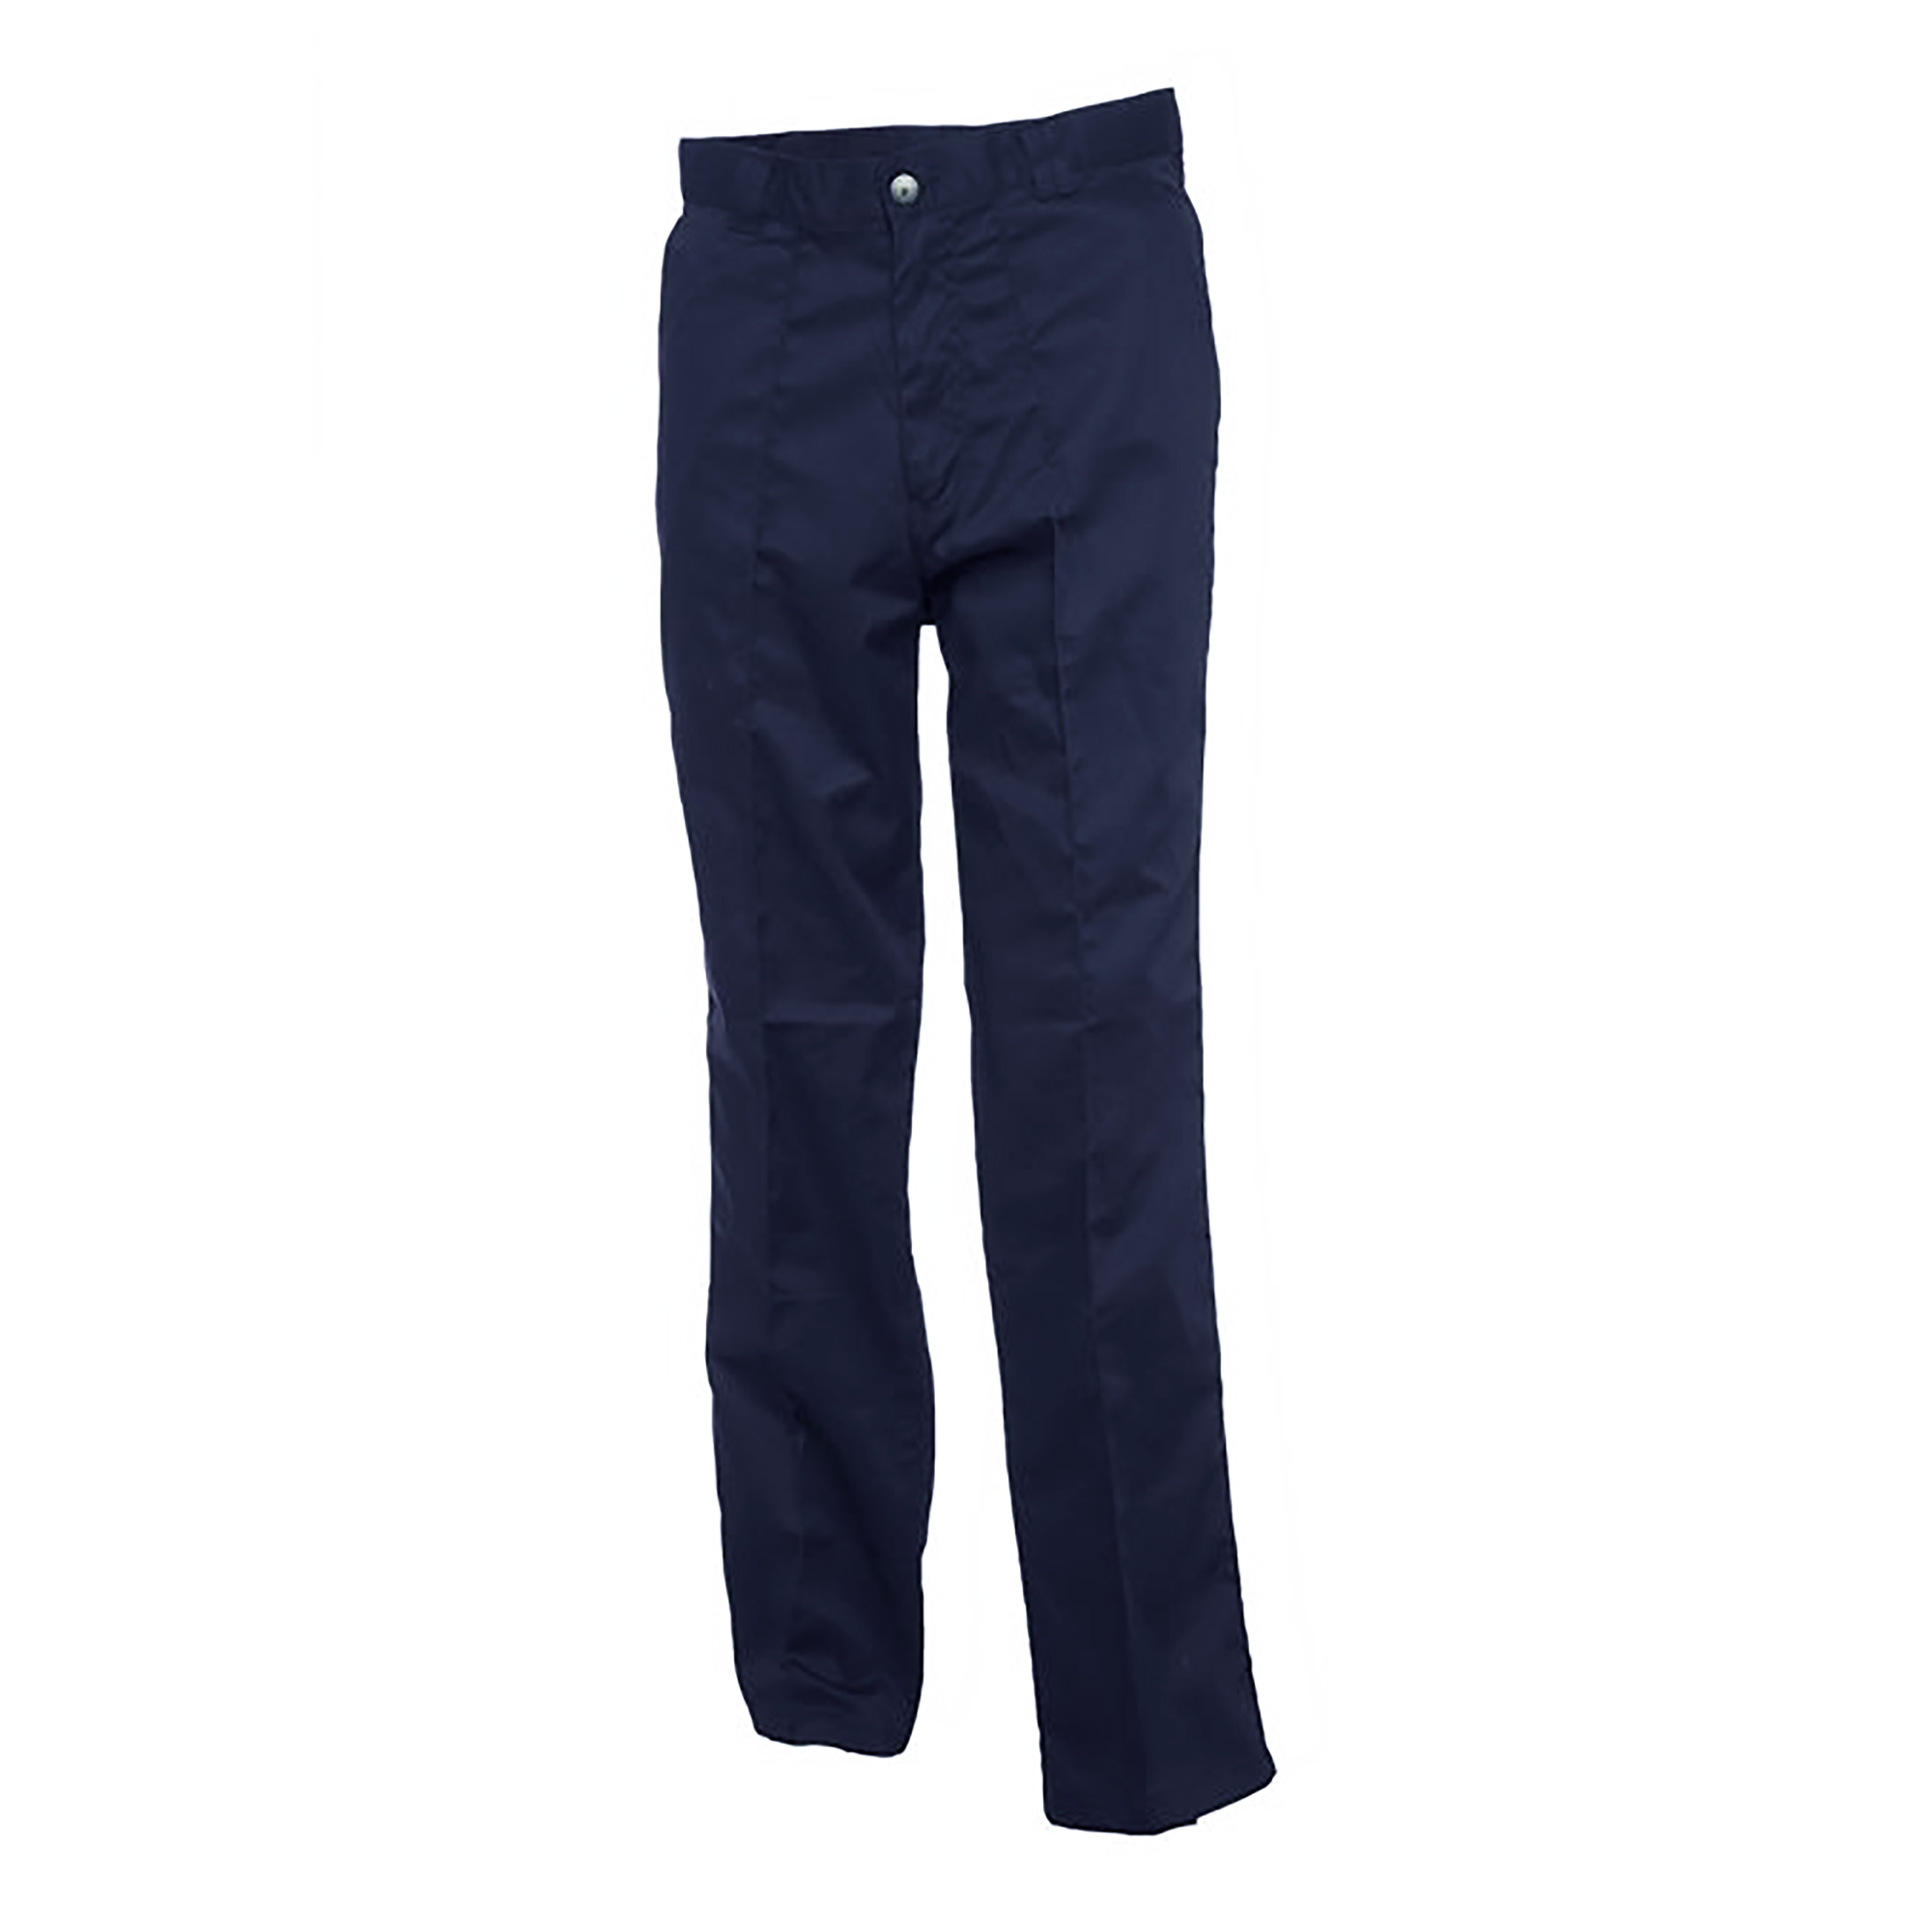 New Uneek UC901R Mens Navy Blue Unisex Workwear Trouser Pants Size 34 Regular 